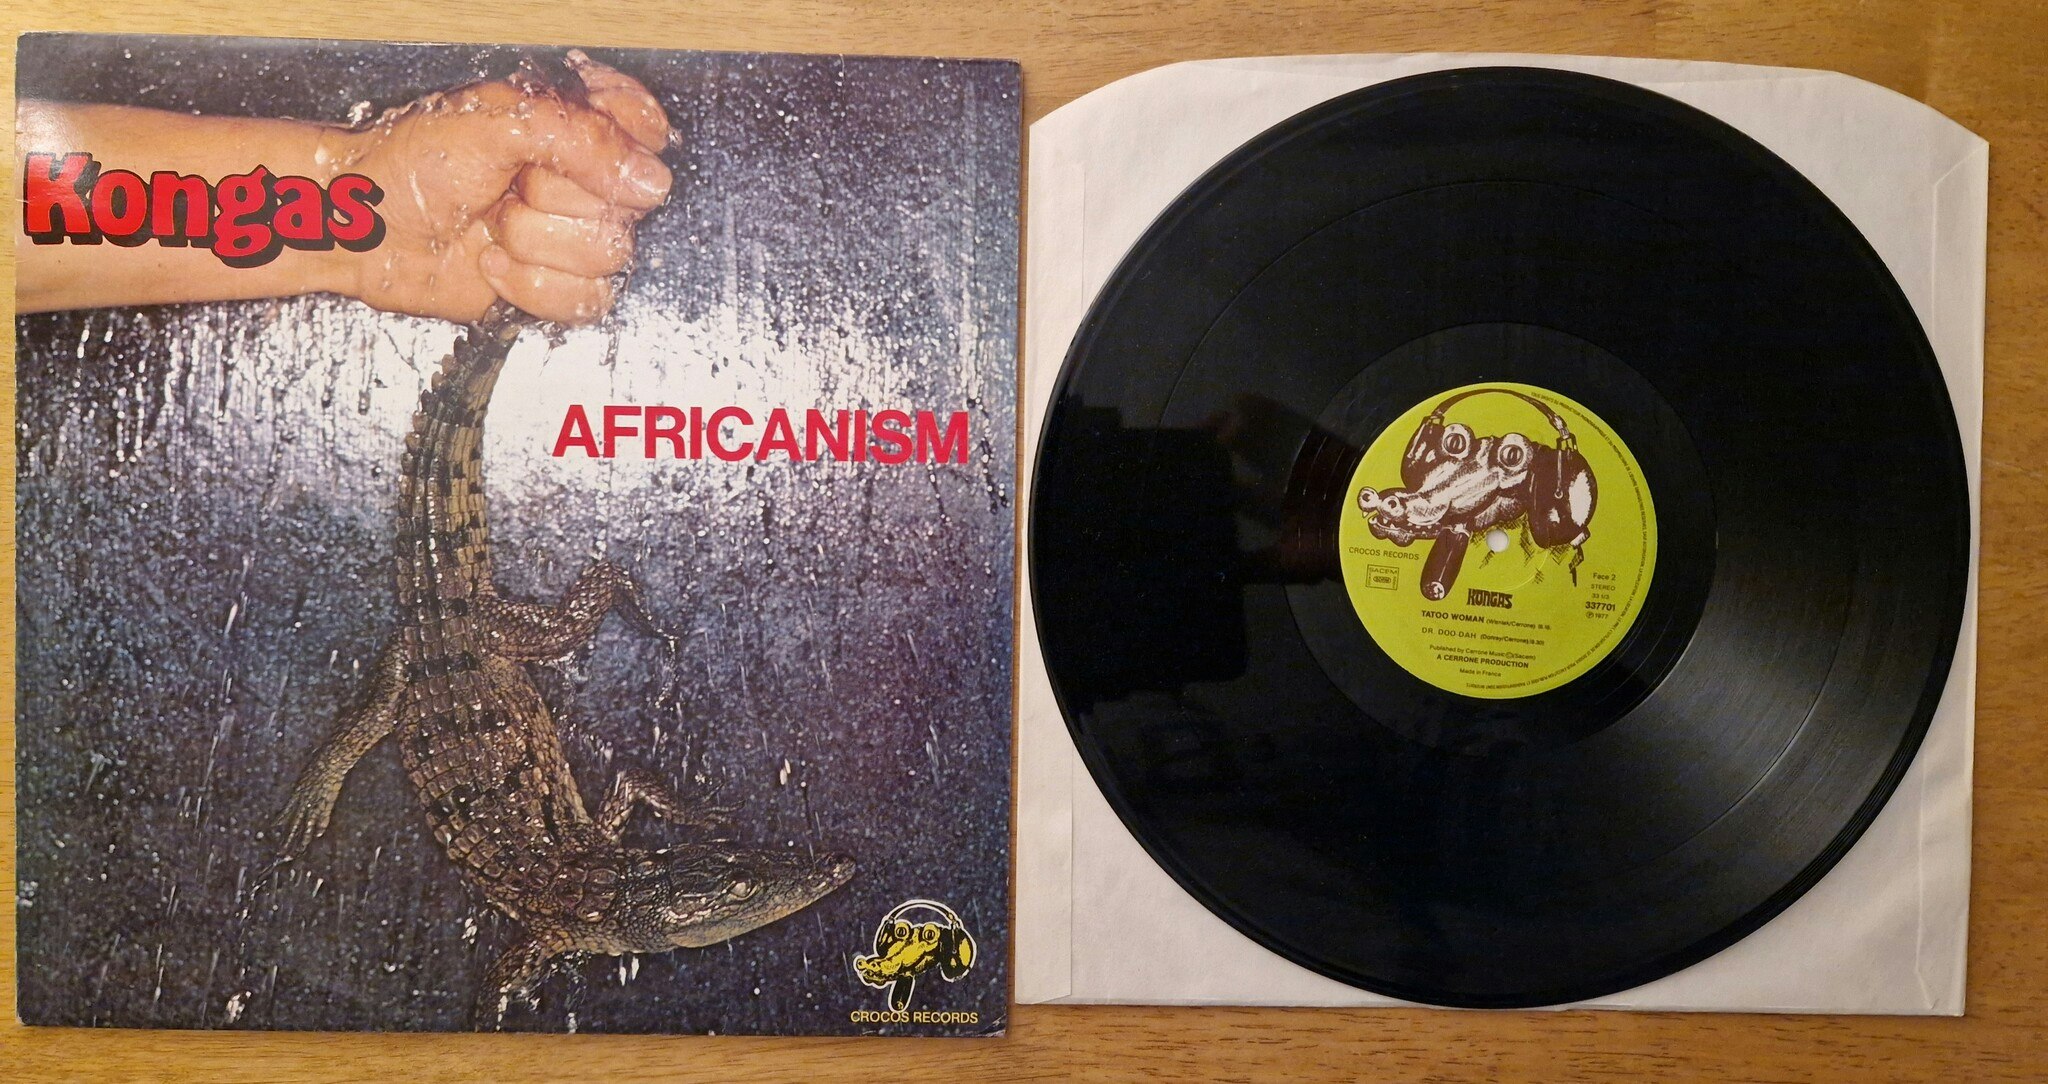 Kongas, Africanism. Vinyl LP